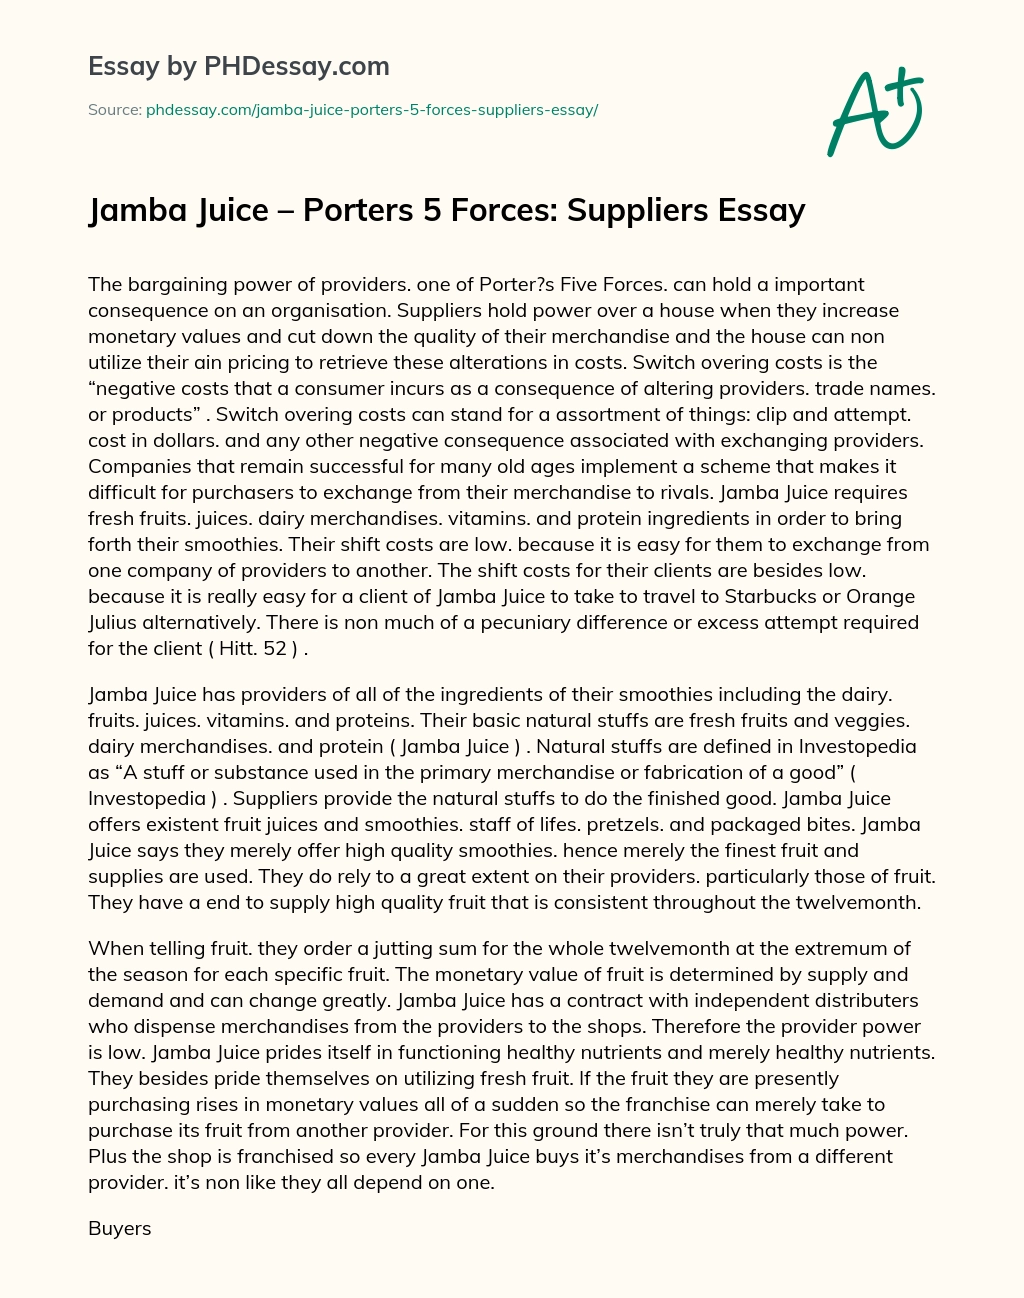 Jamba Juice – Porters 5 Forces: Suppliers Essay essay